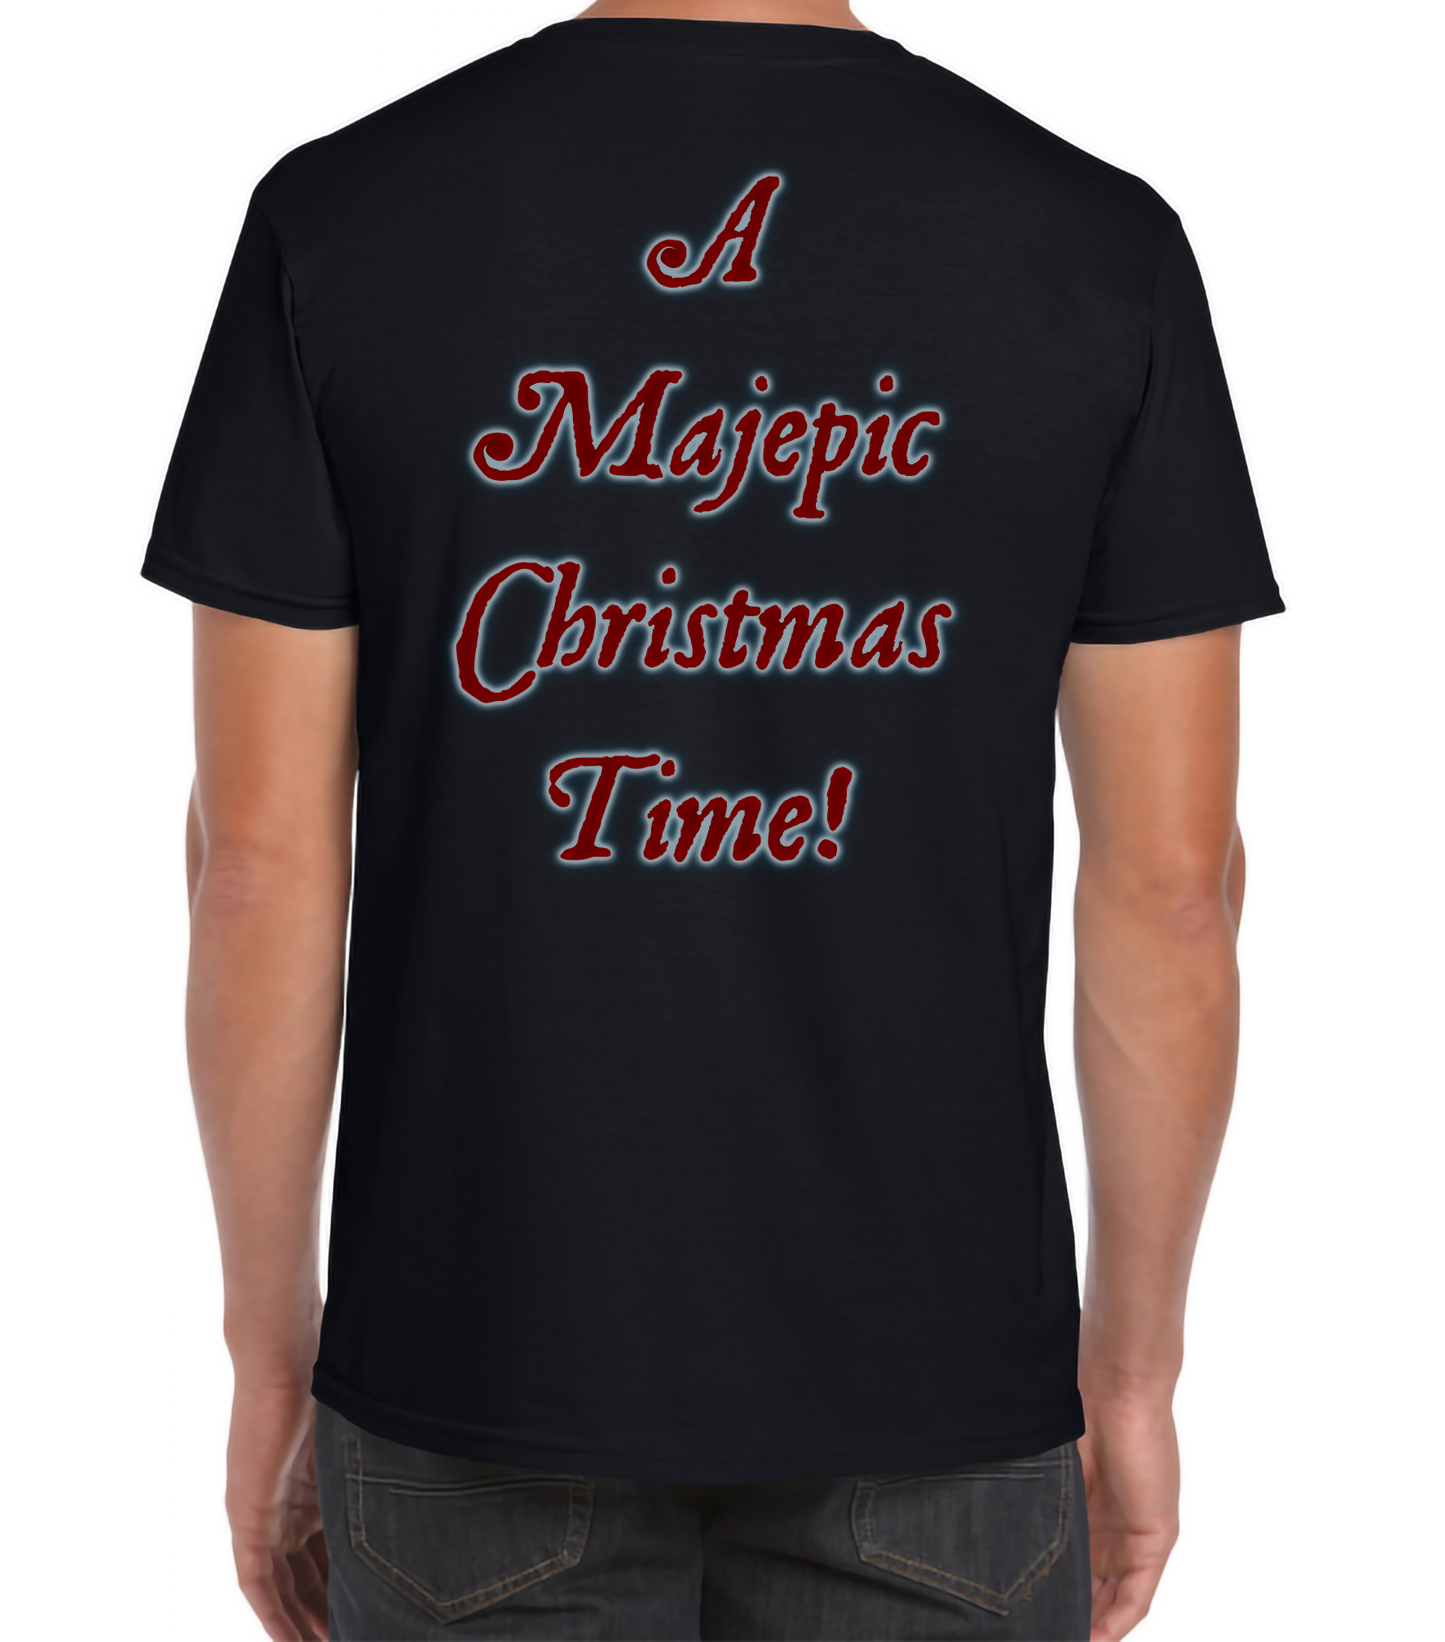 Majestica Christmas Logo T-Shirt